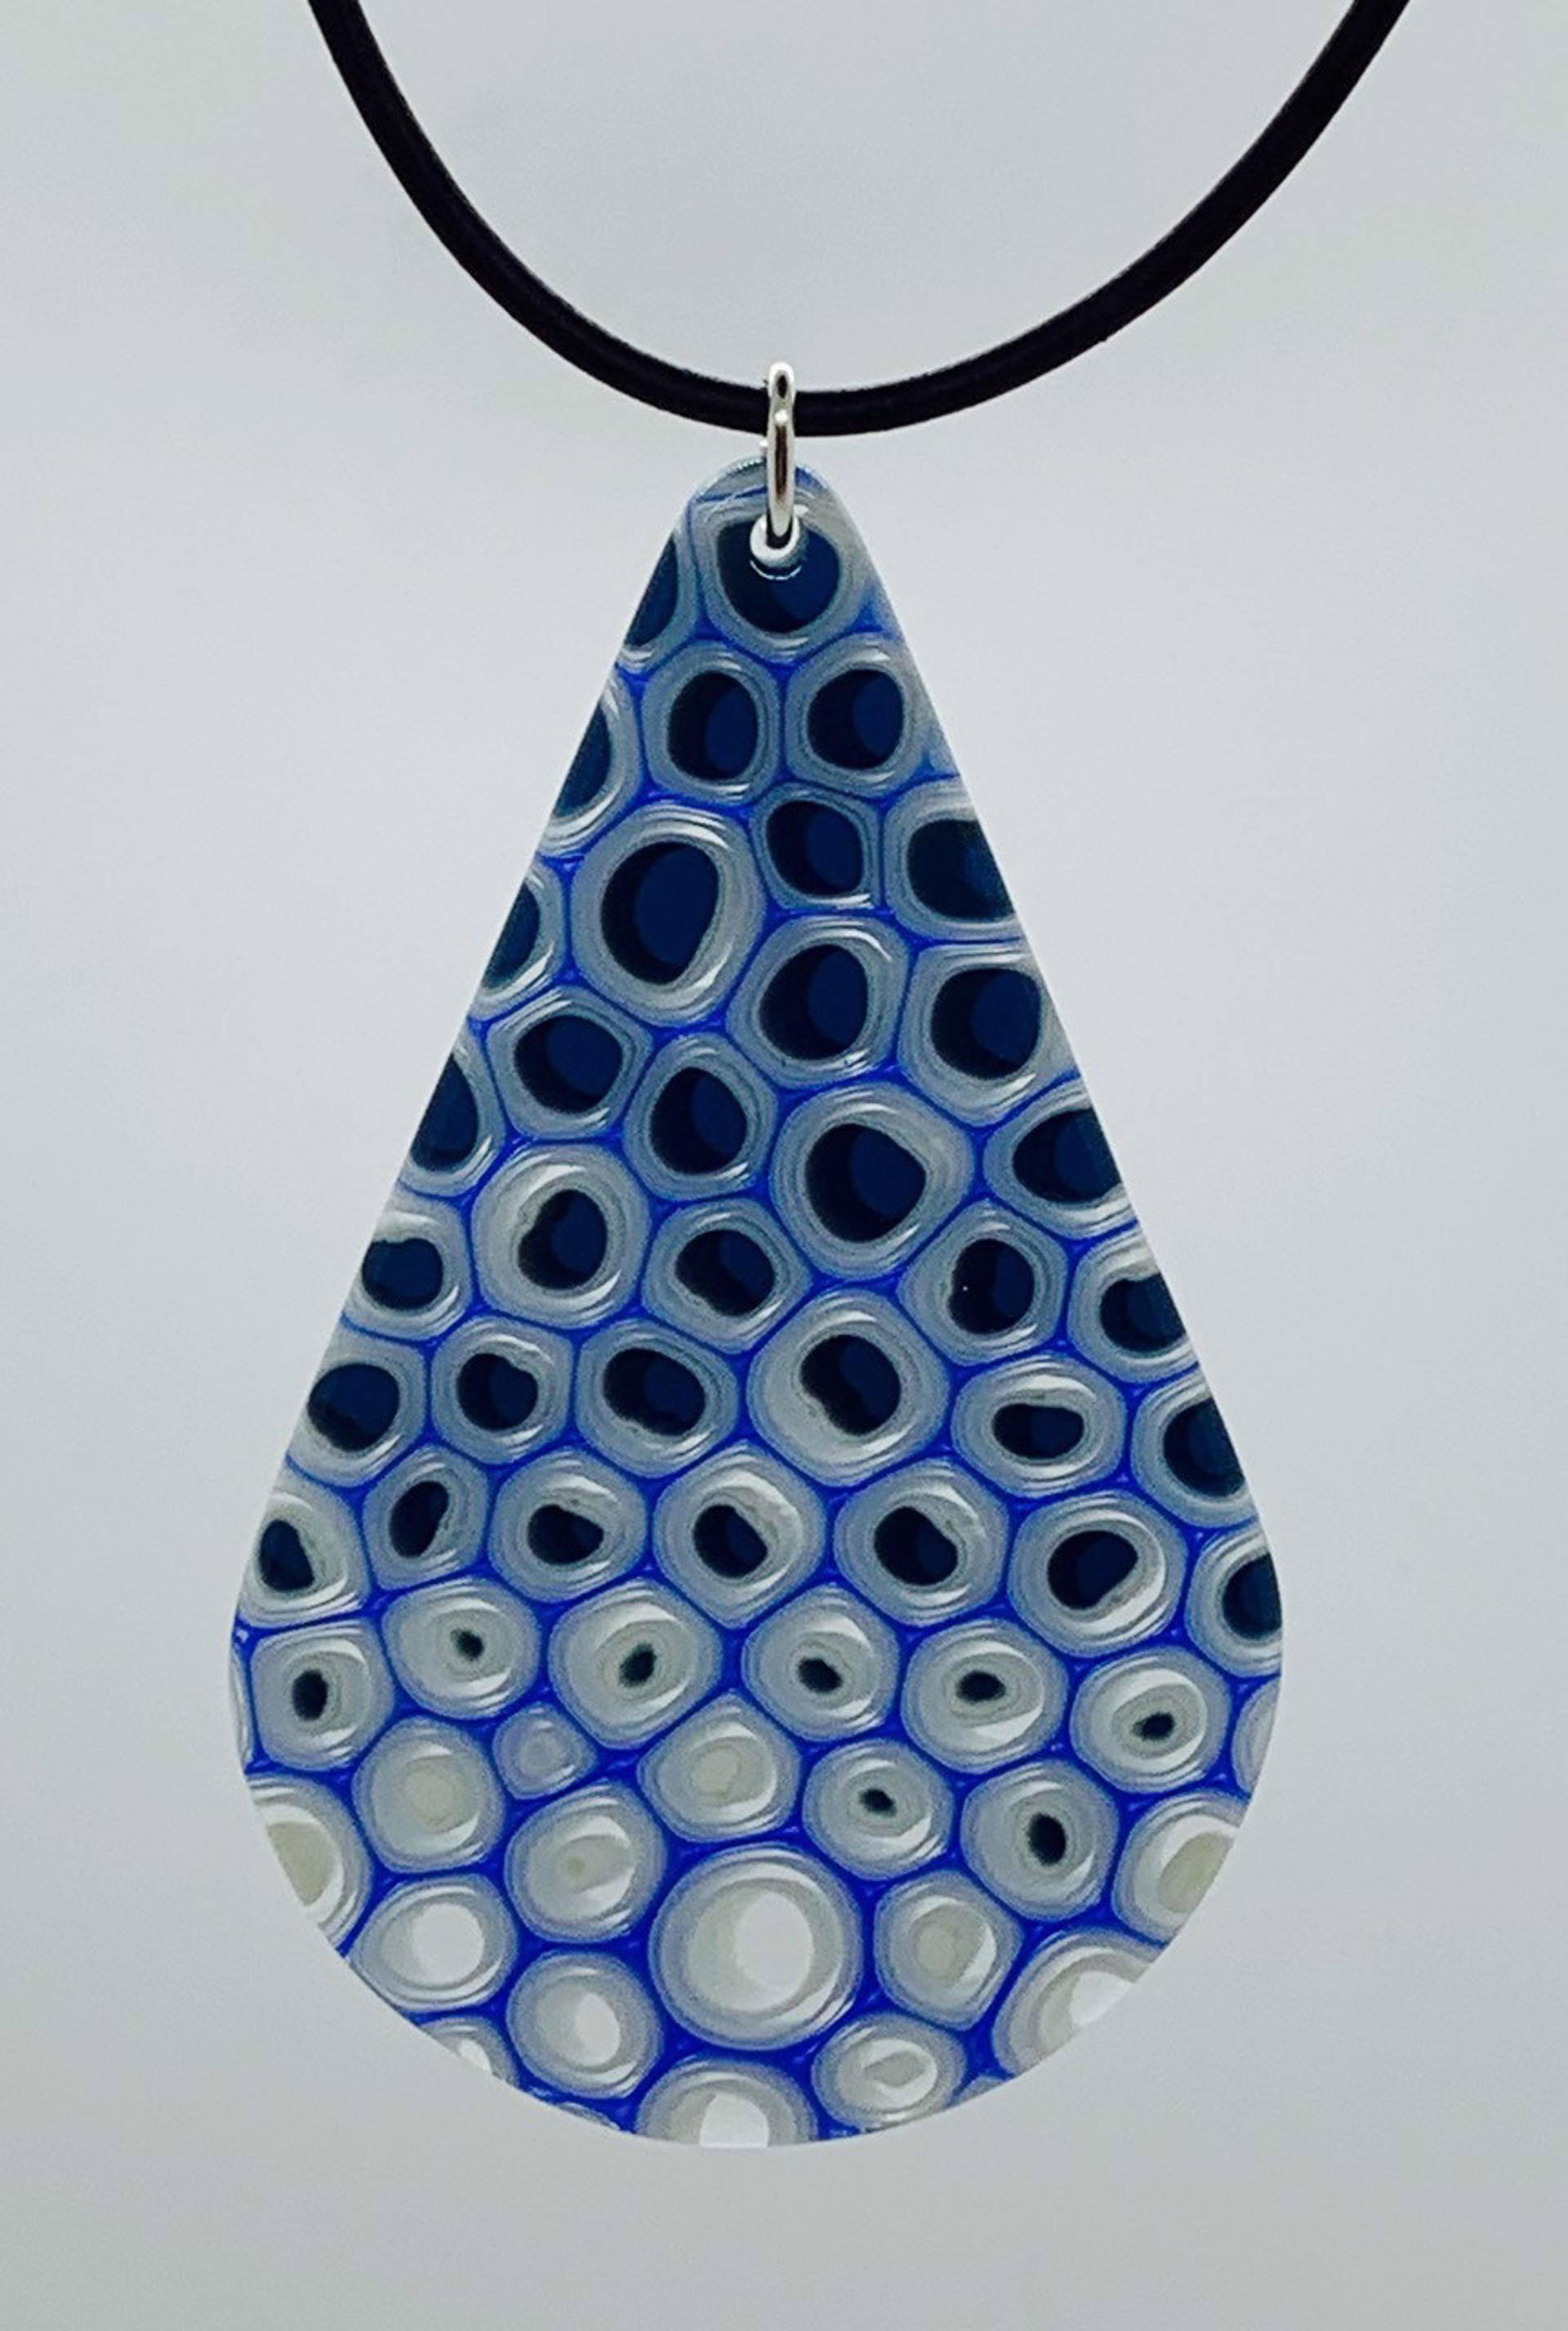 Murrini Large Teardrop Necklace by Chris Cox